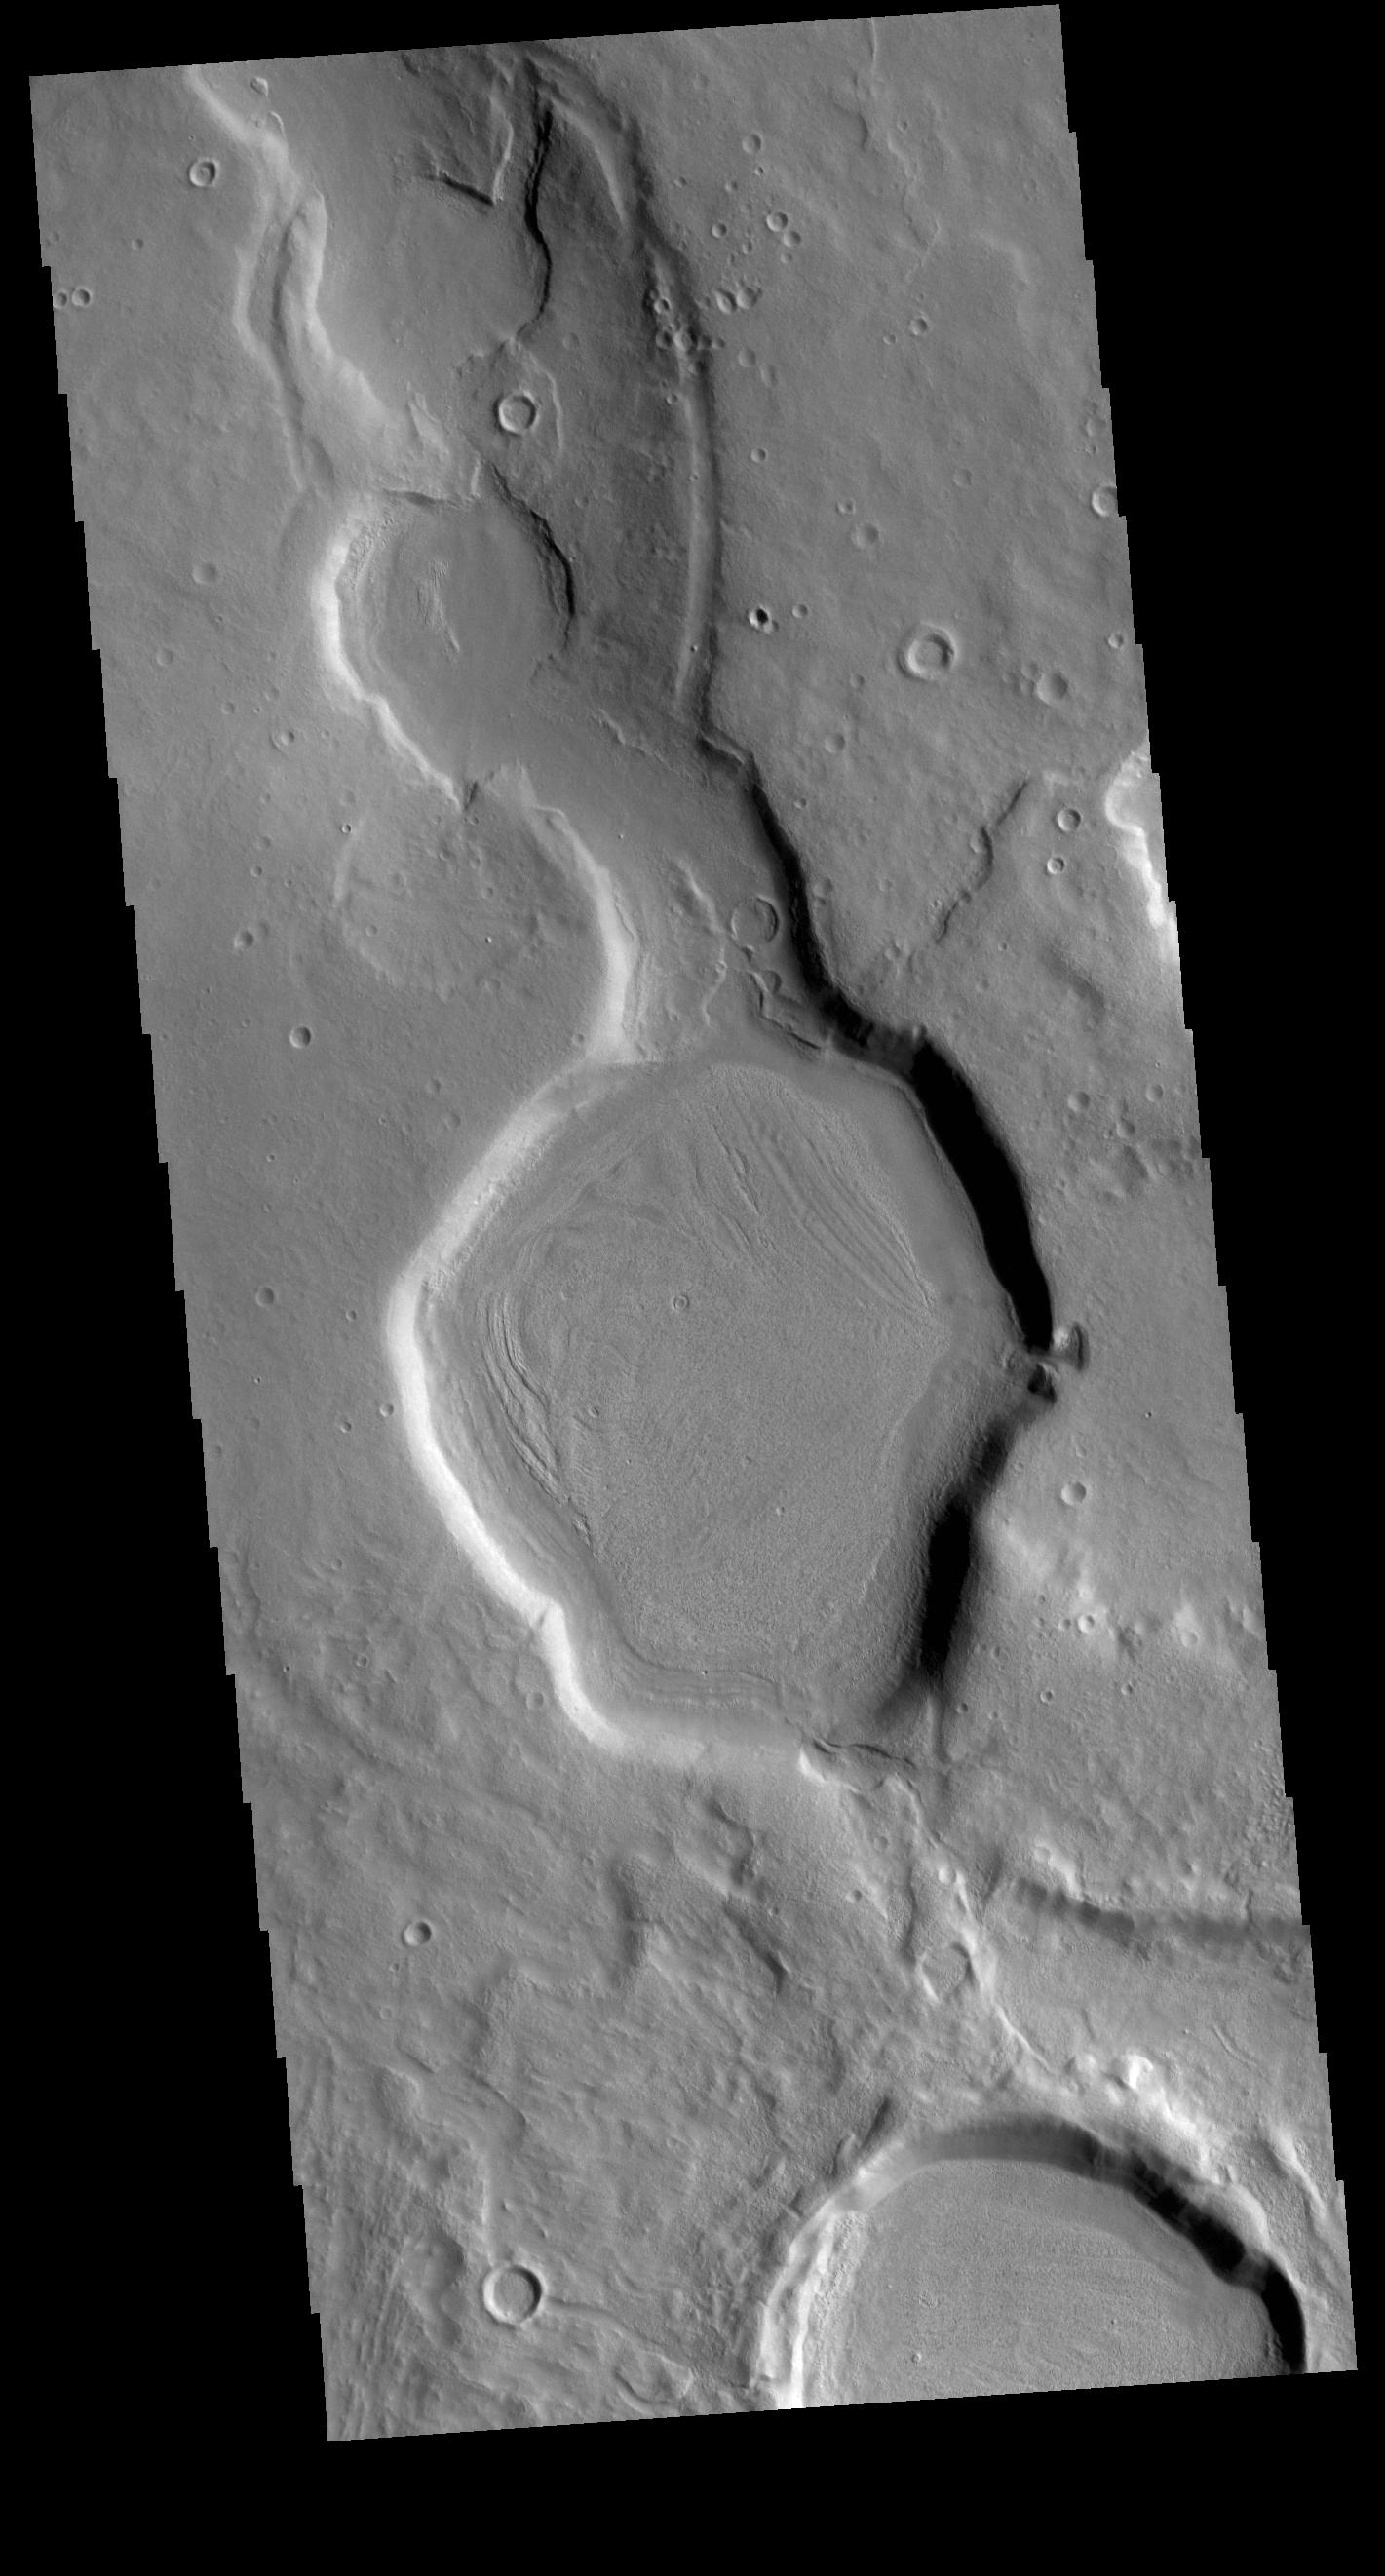 PIA23656: Arabia Terra Channel